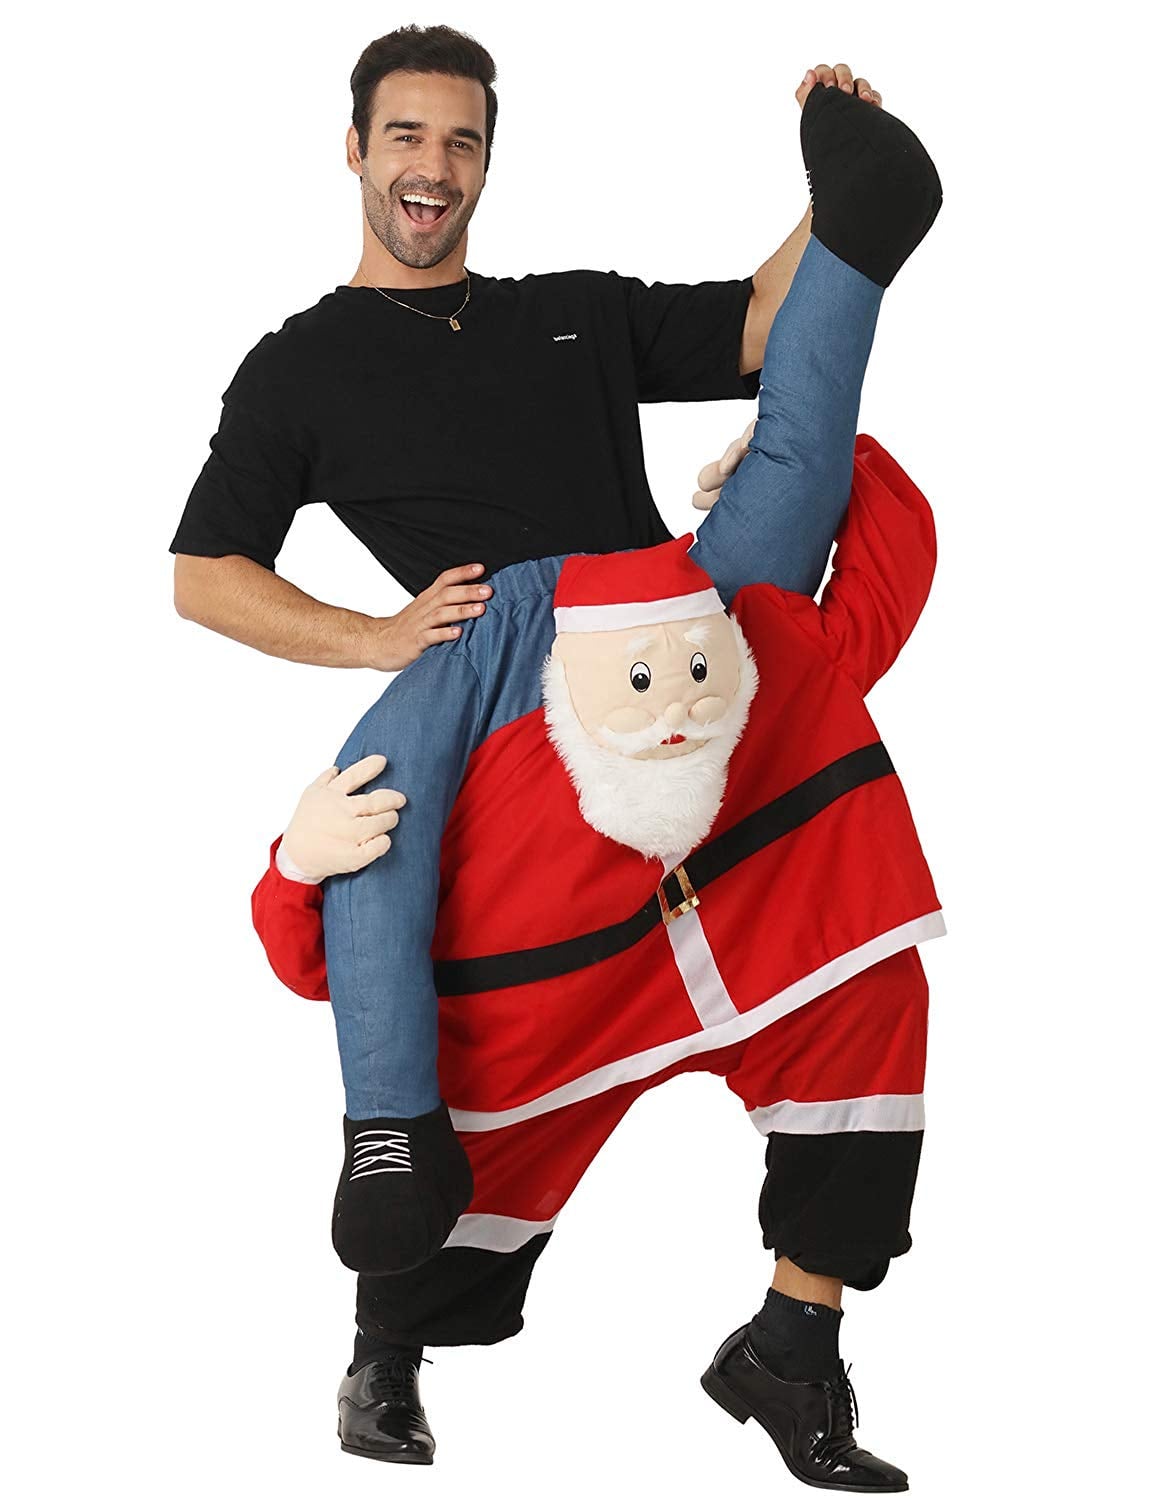 Shoulder Carry Me Piggy Back Ride On Fancy Dress Adult Party Christmas Costume 